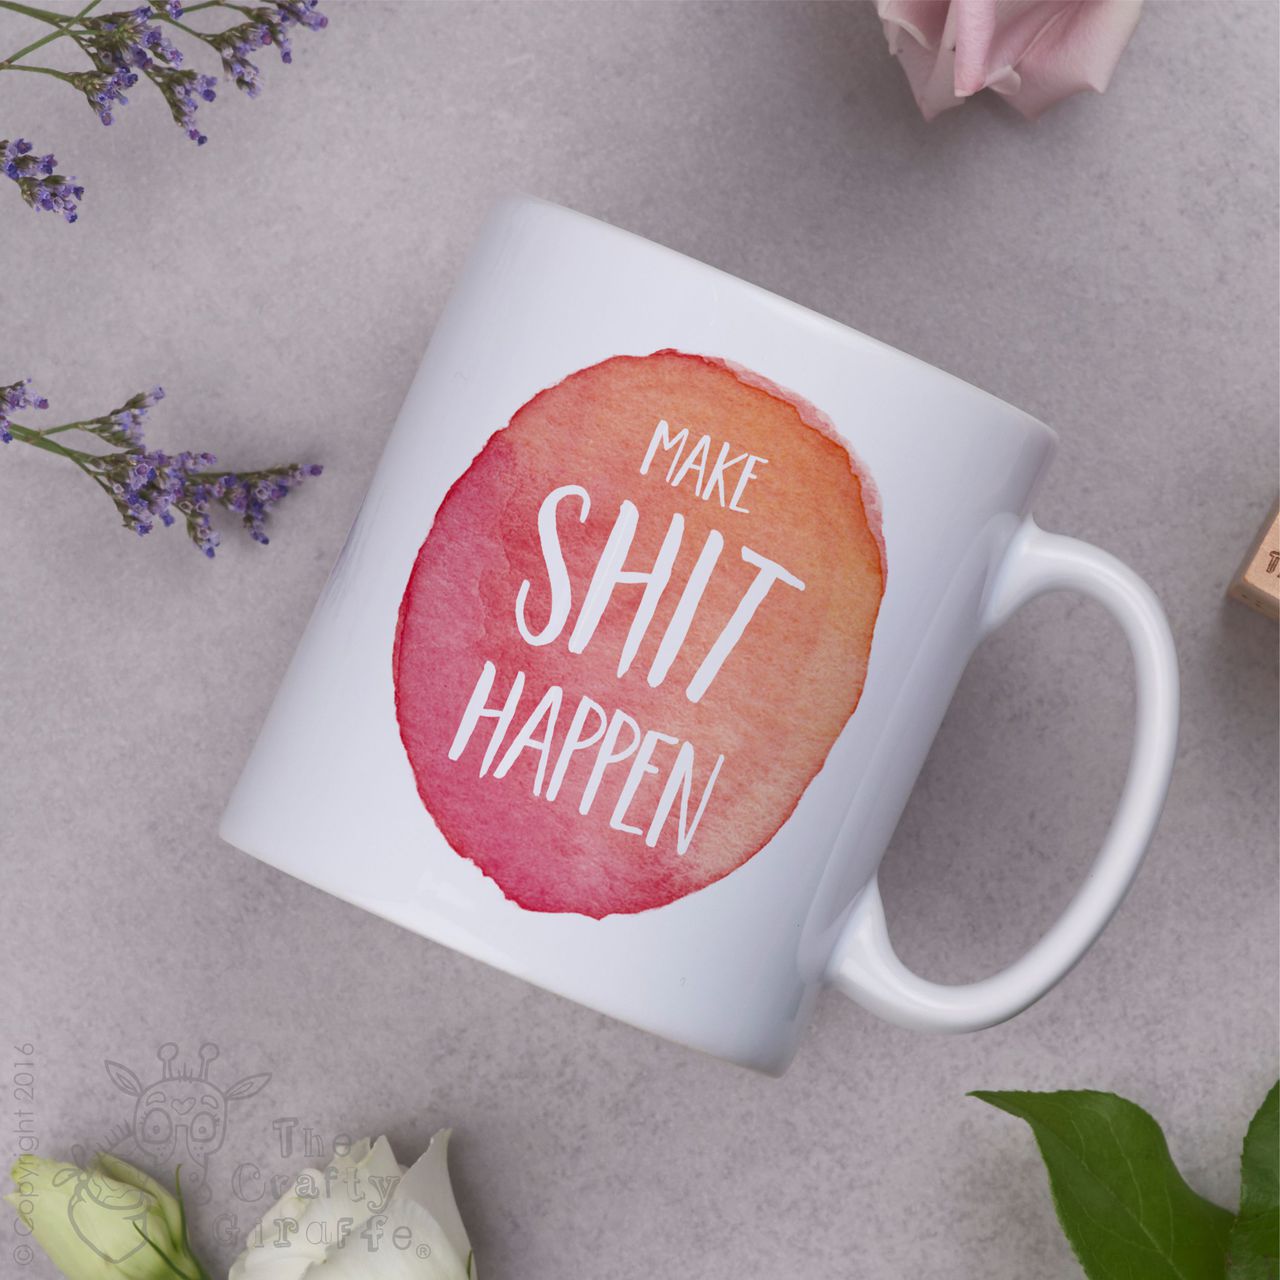 Make shit happen Mug